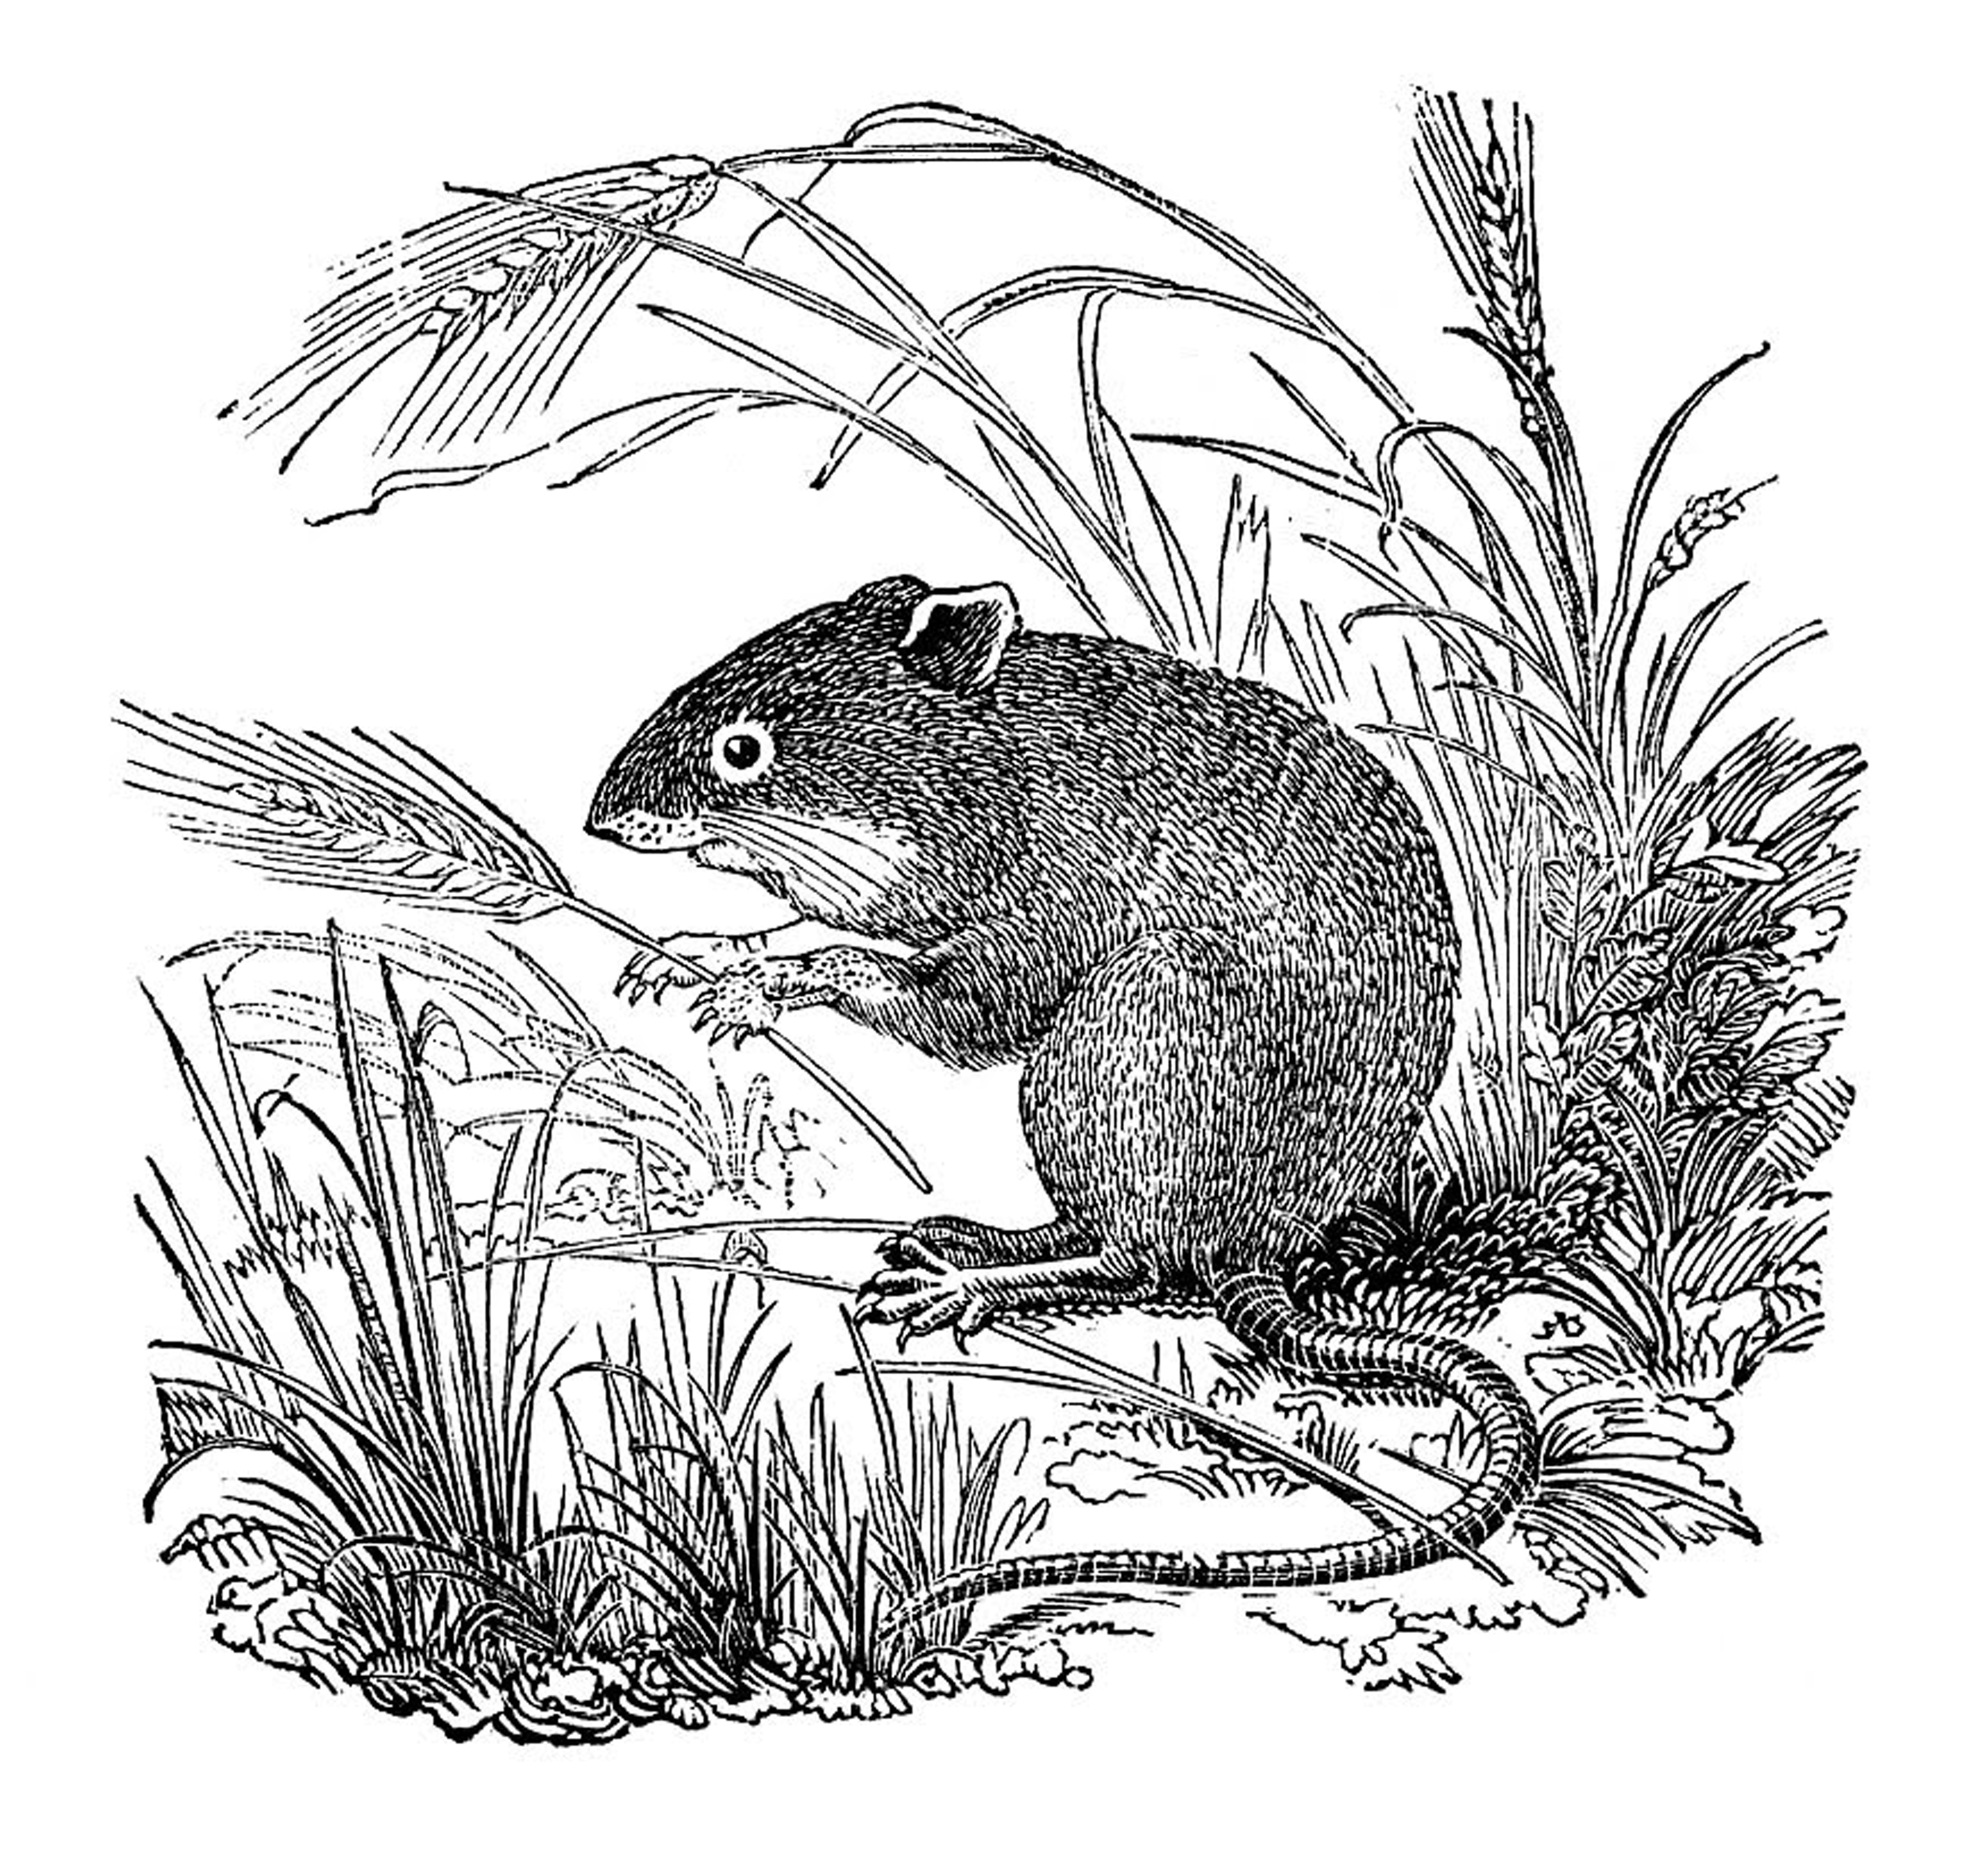 mice illustration